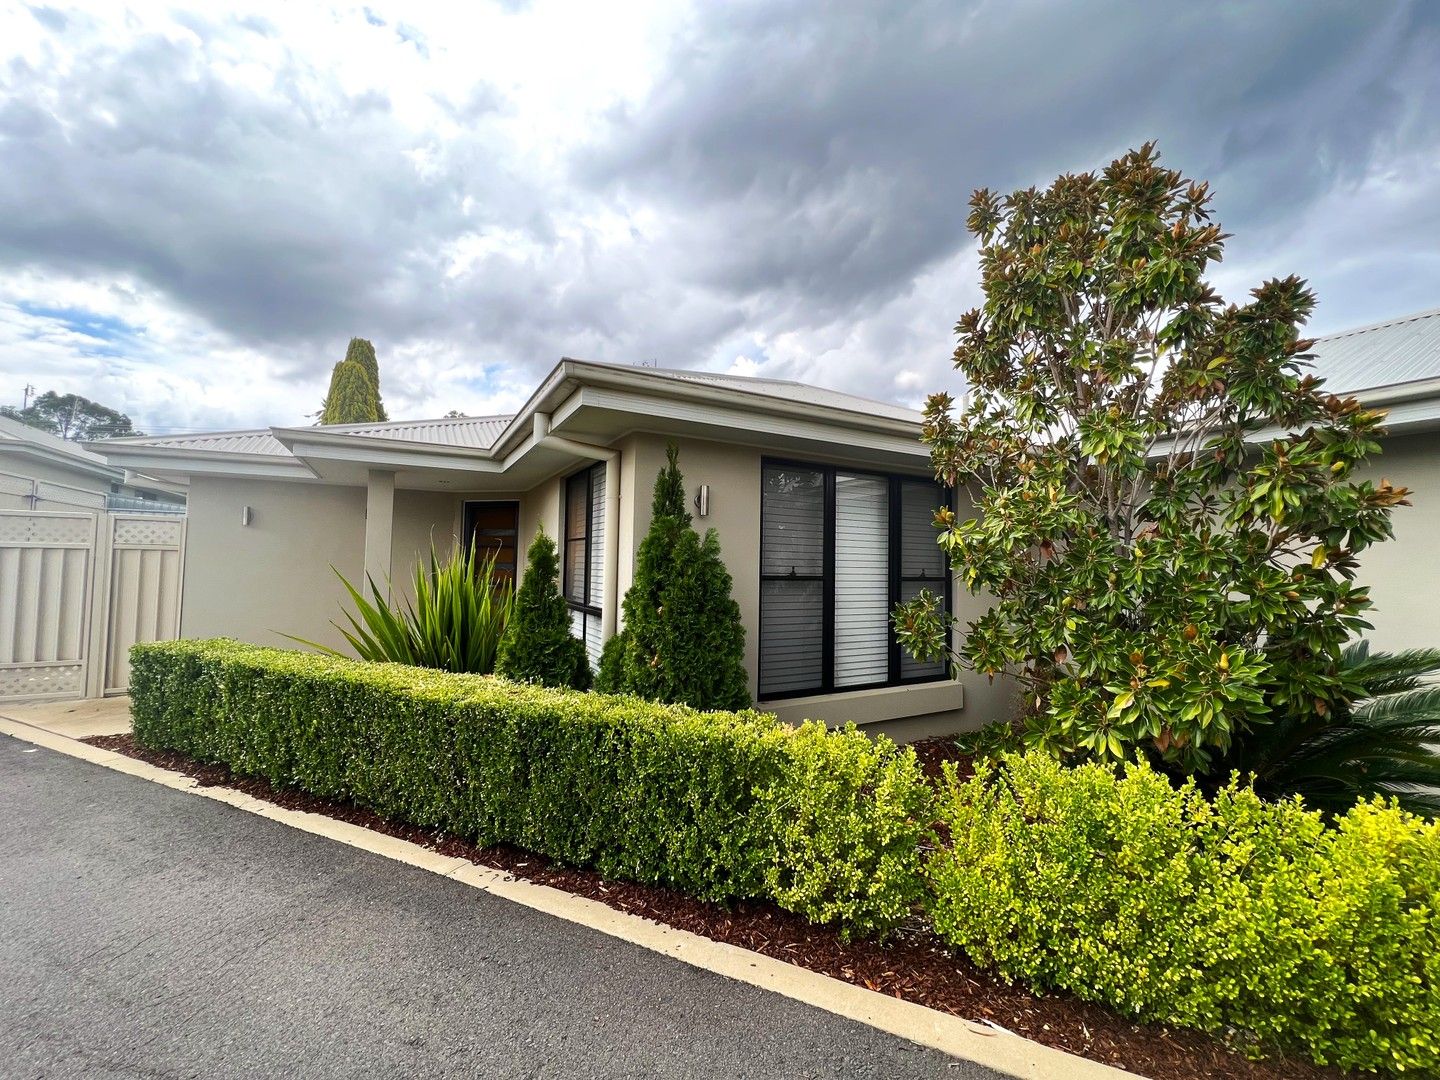 2 bedrooms Villa in 11/19-21 Boundary Road DUBBO NSW, 2830